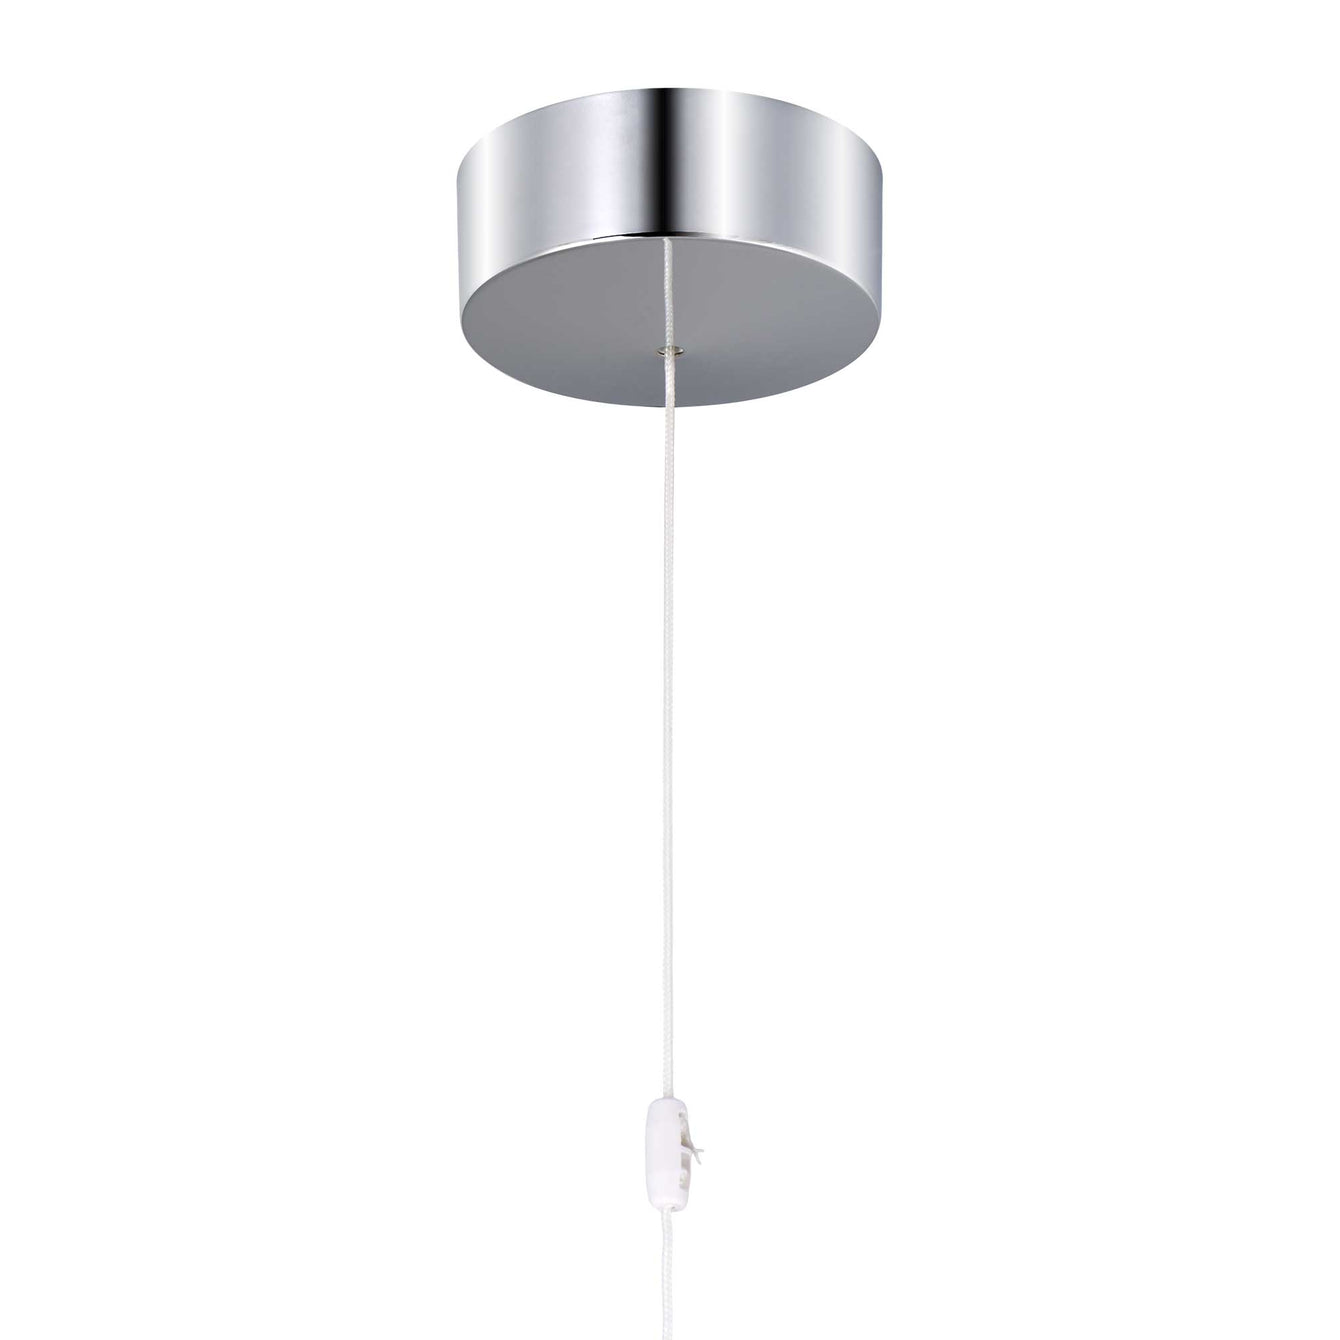 ElekTek Light Pull Cord Switch Ideal for Bathroom Ceiling Plated Steel Cover (Matt Black - Thermoplastic) Brass/Black Cord